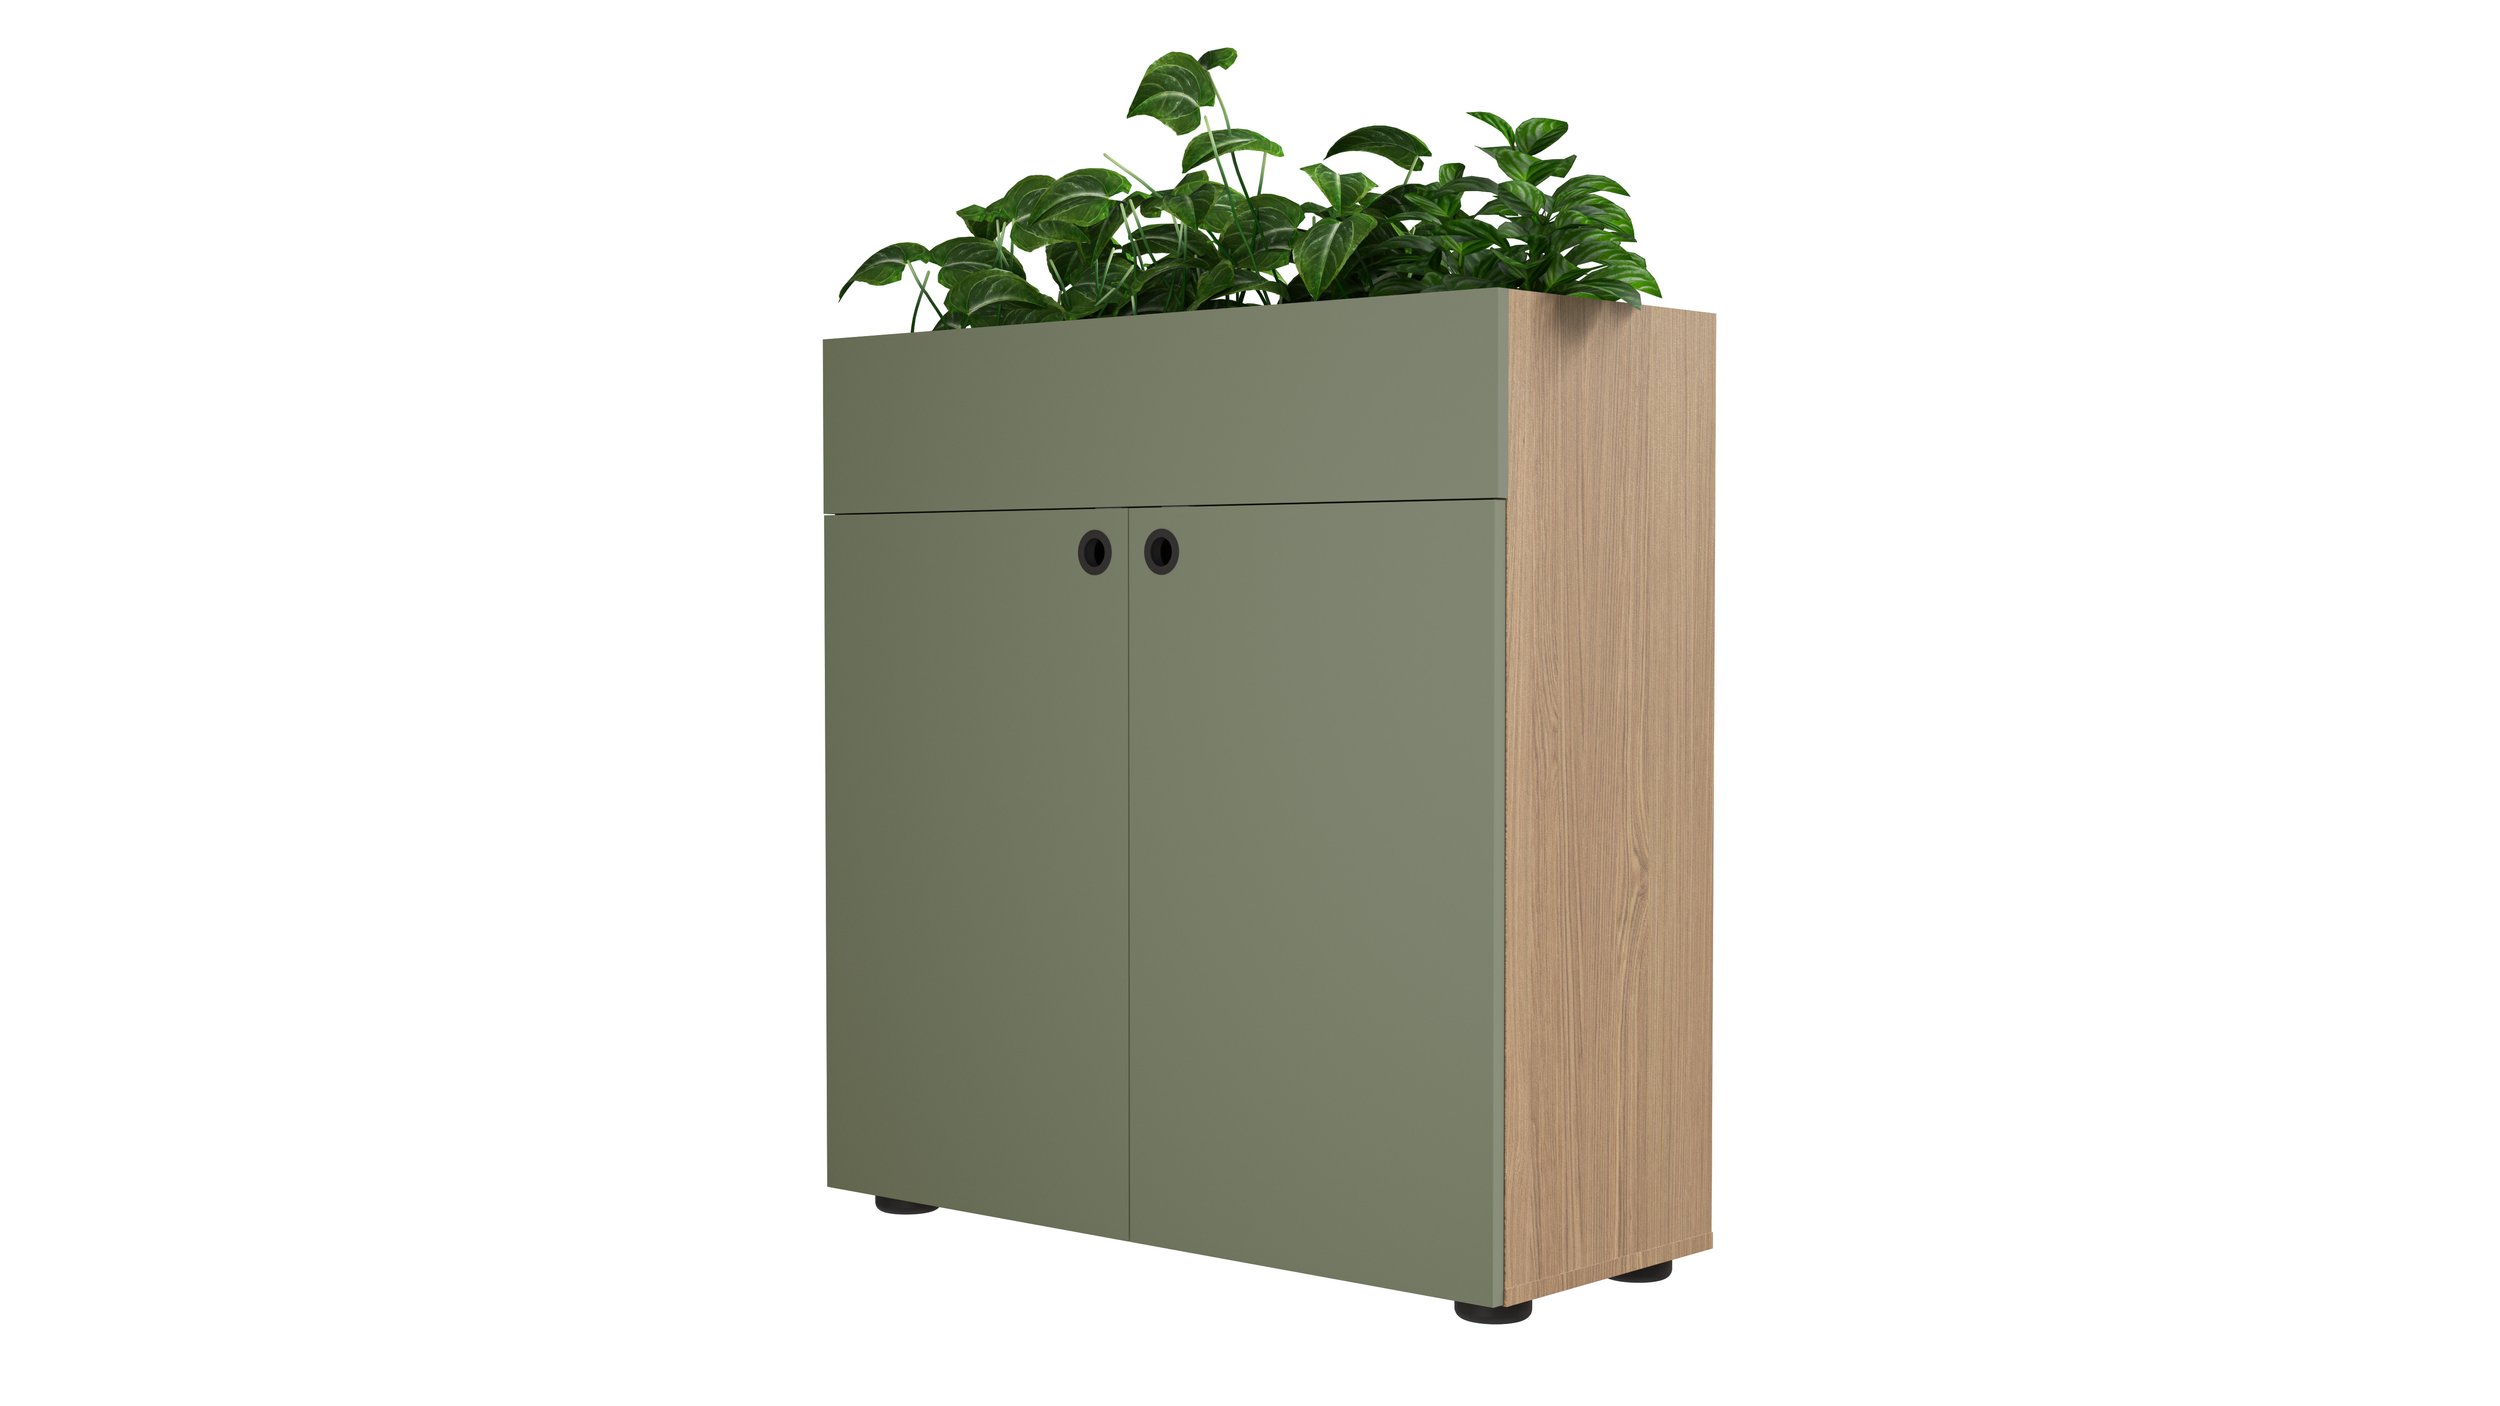 Rawside Work Storage with Planter - Sage